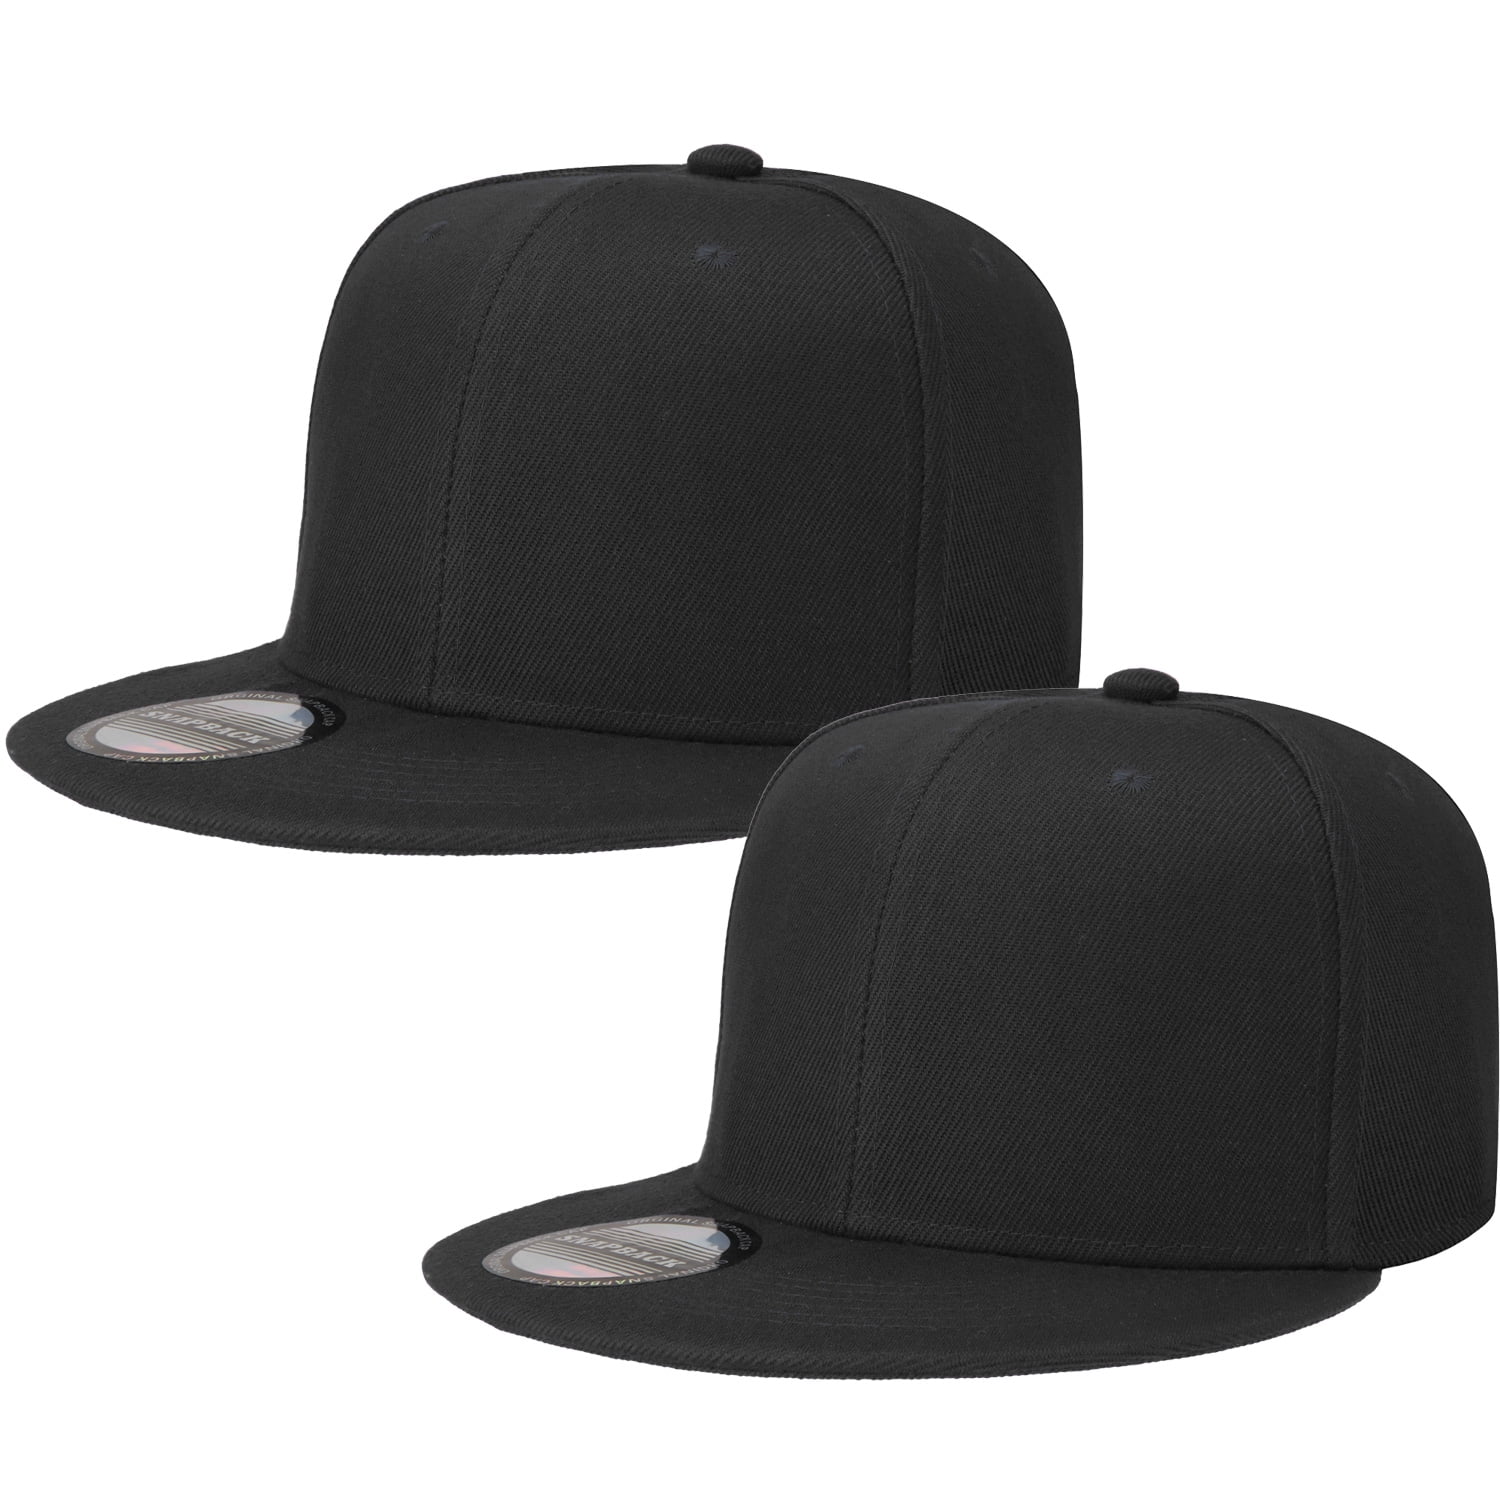 2-pack Classic Snapback Hat Cap Hip Hop Style Flat Bill Blank Solid Color Adjustable Size Black & Black